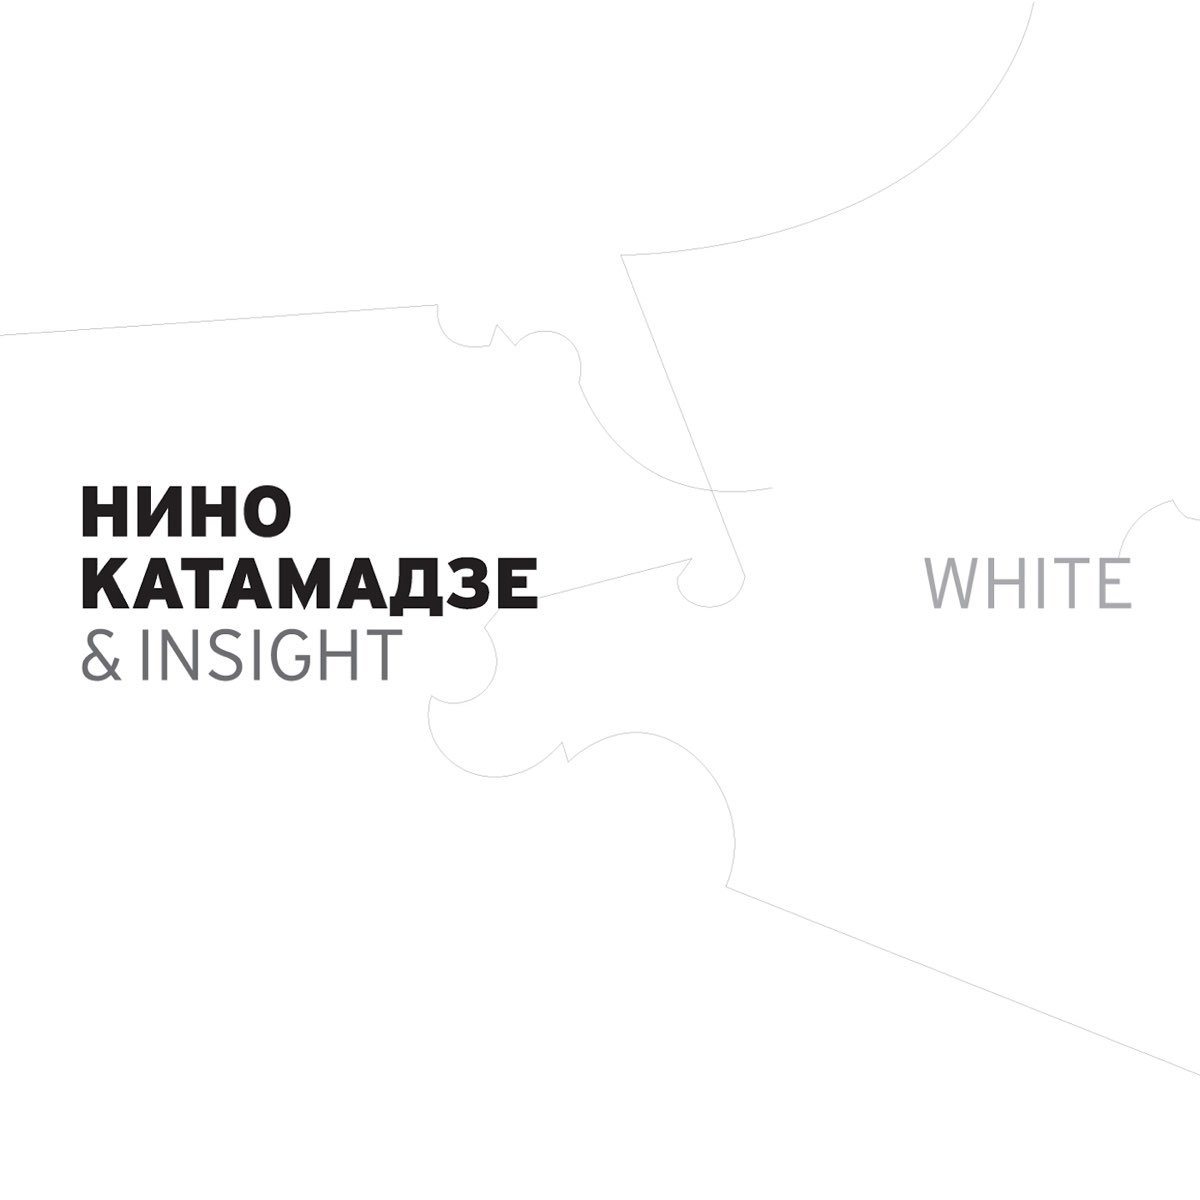 Нино Катамадзе. Нино Катамадзе 2006. Нино Катамадзе & Insight. Нино Катамадзе White. Нино бело